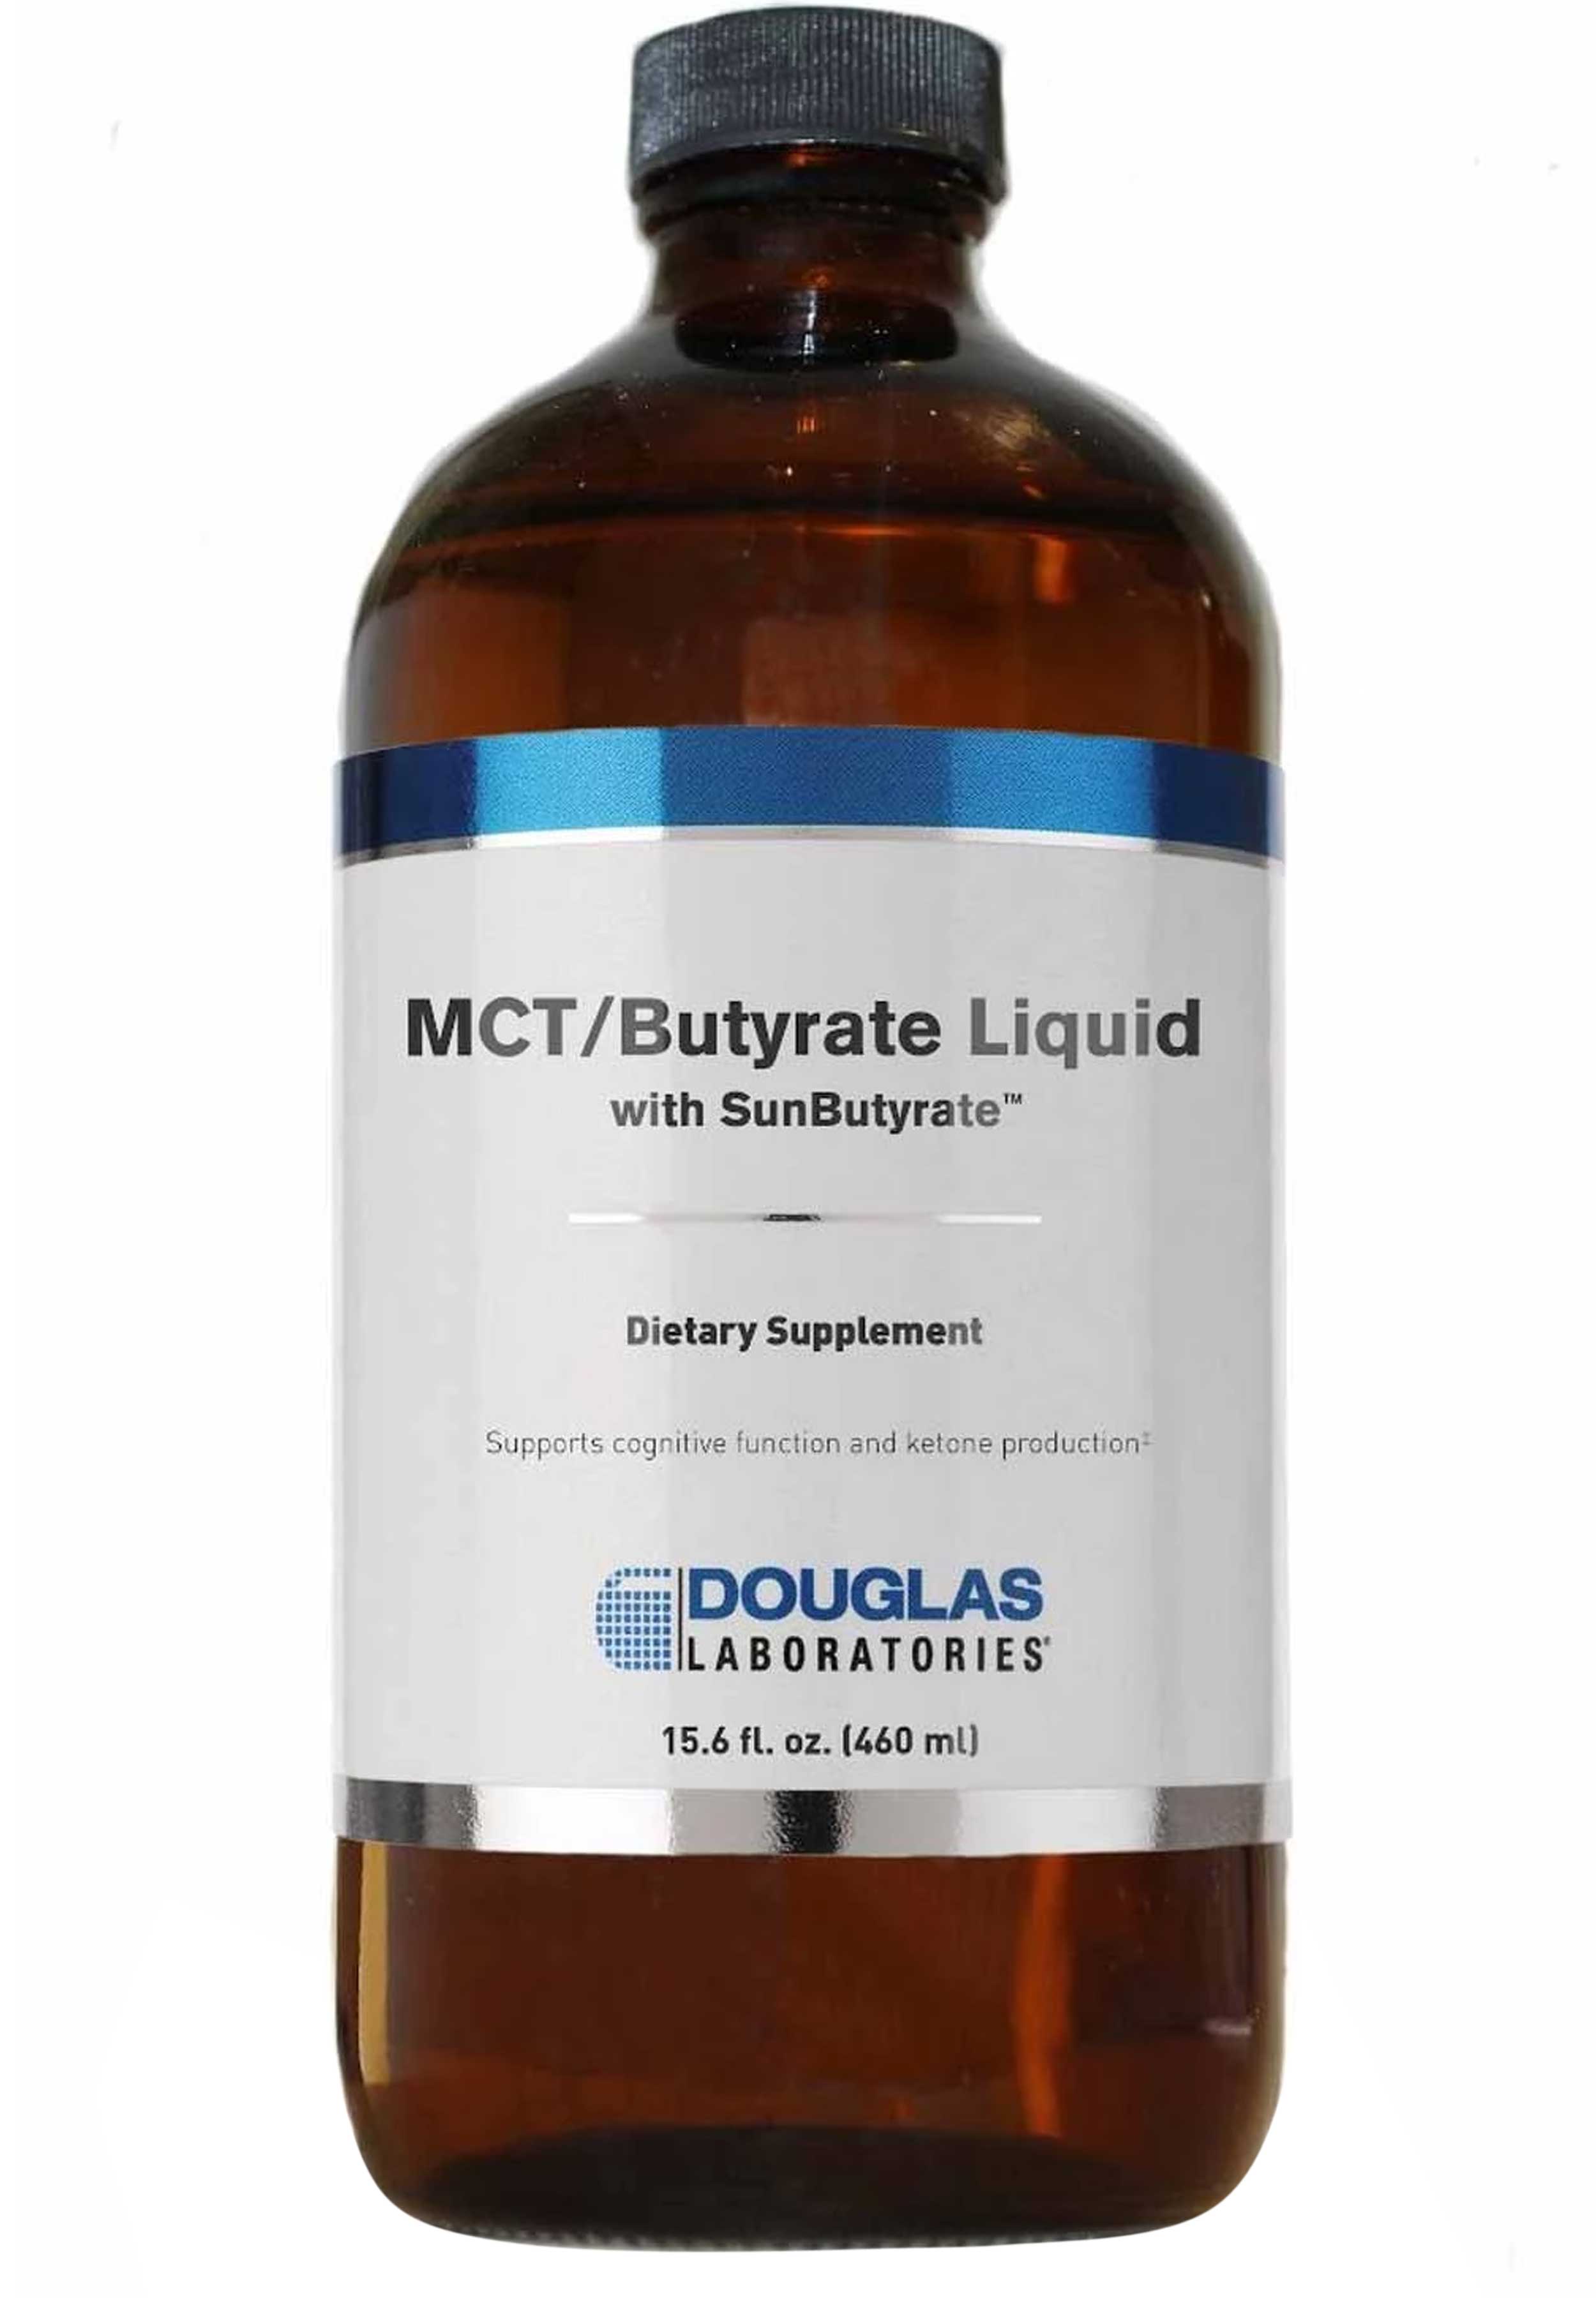 Douglas Laboratories MCT/Butyrate Liquid with SunButyrate